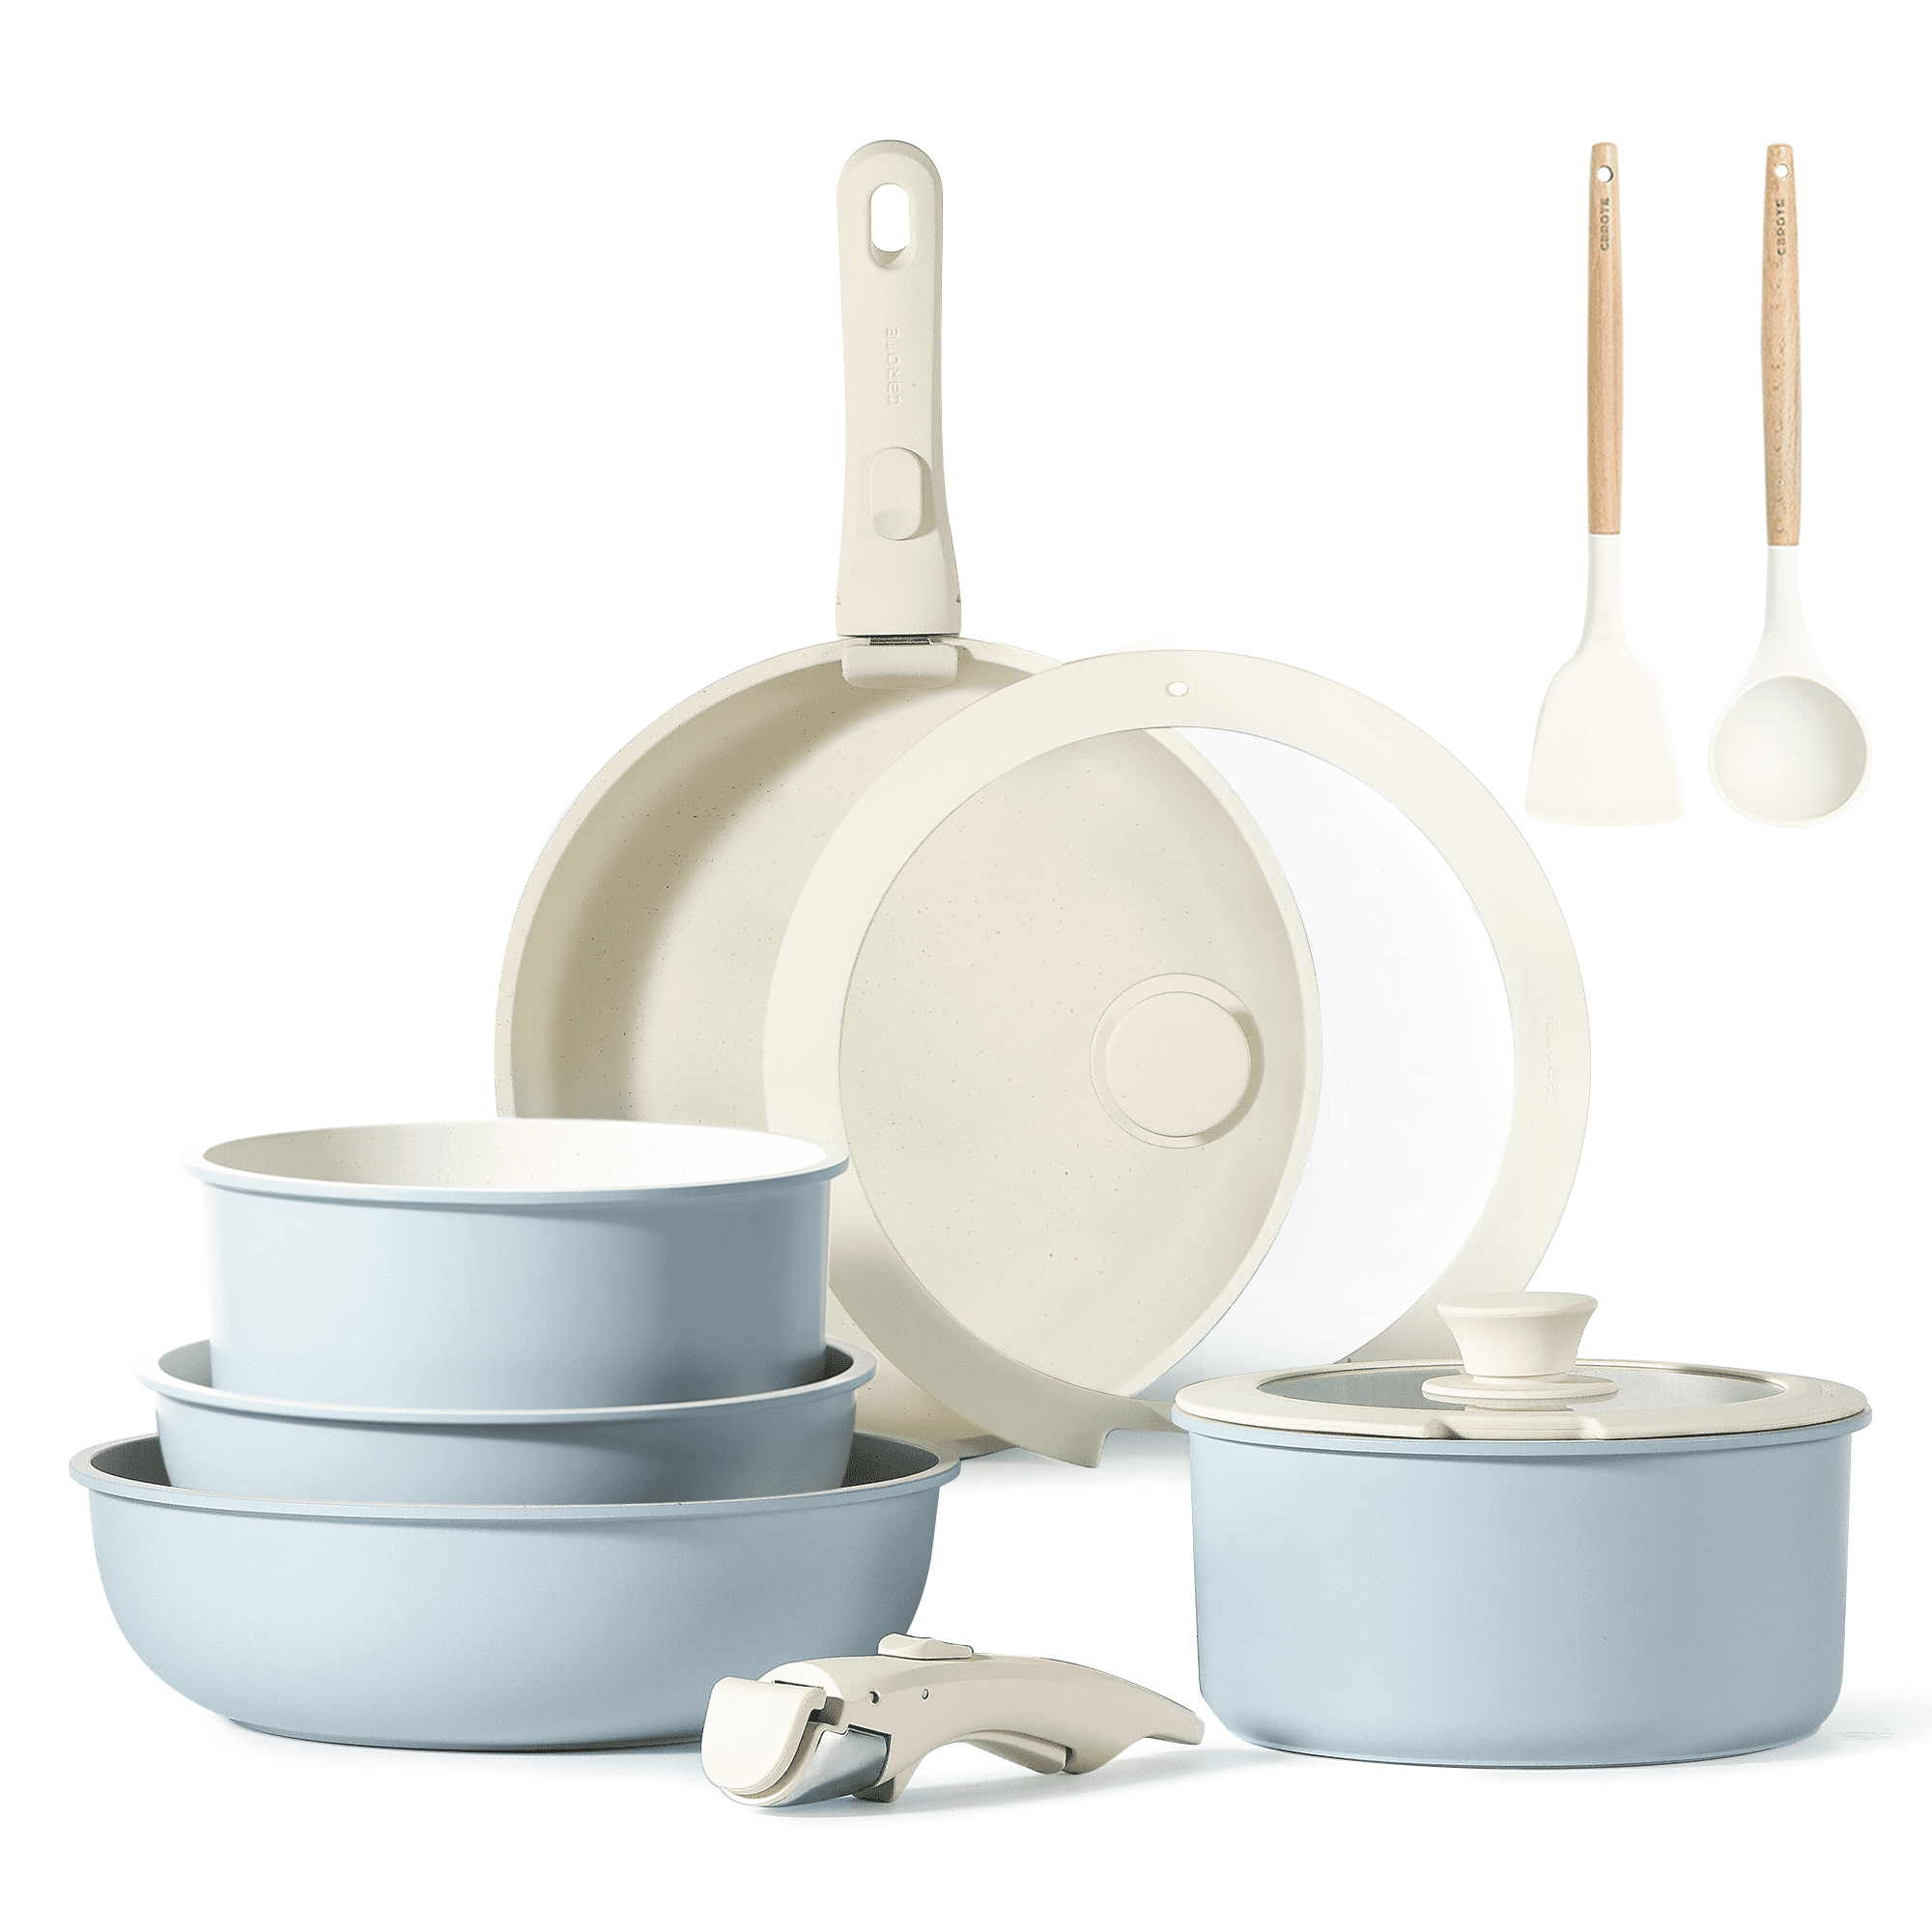 Walmart Carote cookware deal: Get a $240 Carote cookware set for